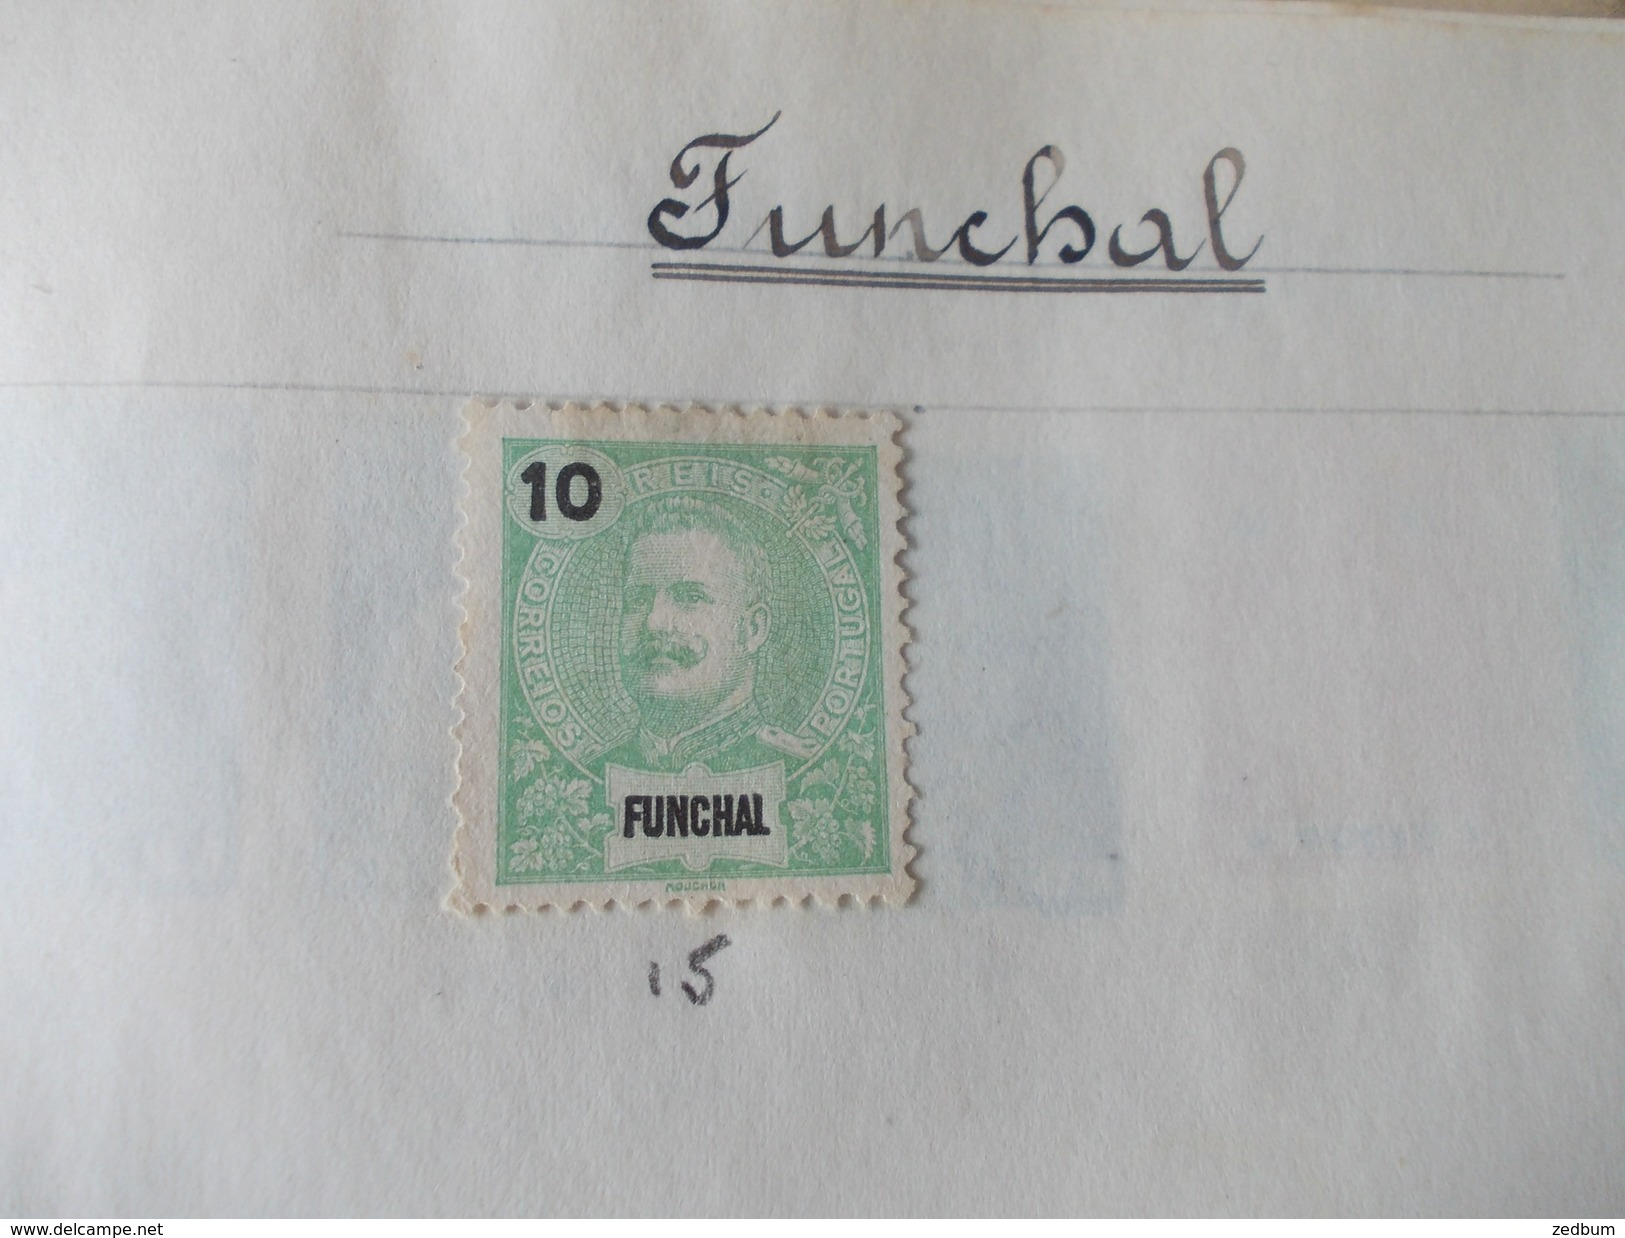 TIMBRE 5 Pages Funchal Guinée Portugaise Inde Hyderabad Hong Kong 12 Timbres Valeur 3.55 &euro; - Guinea Portuguesa